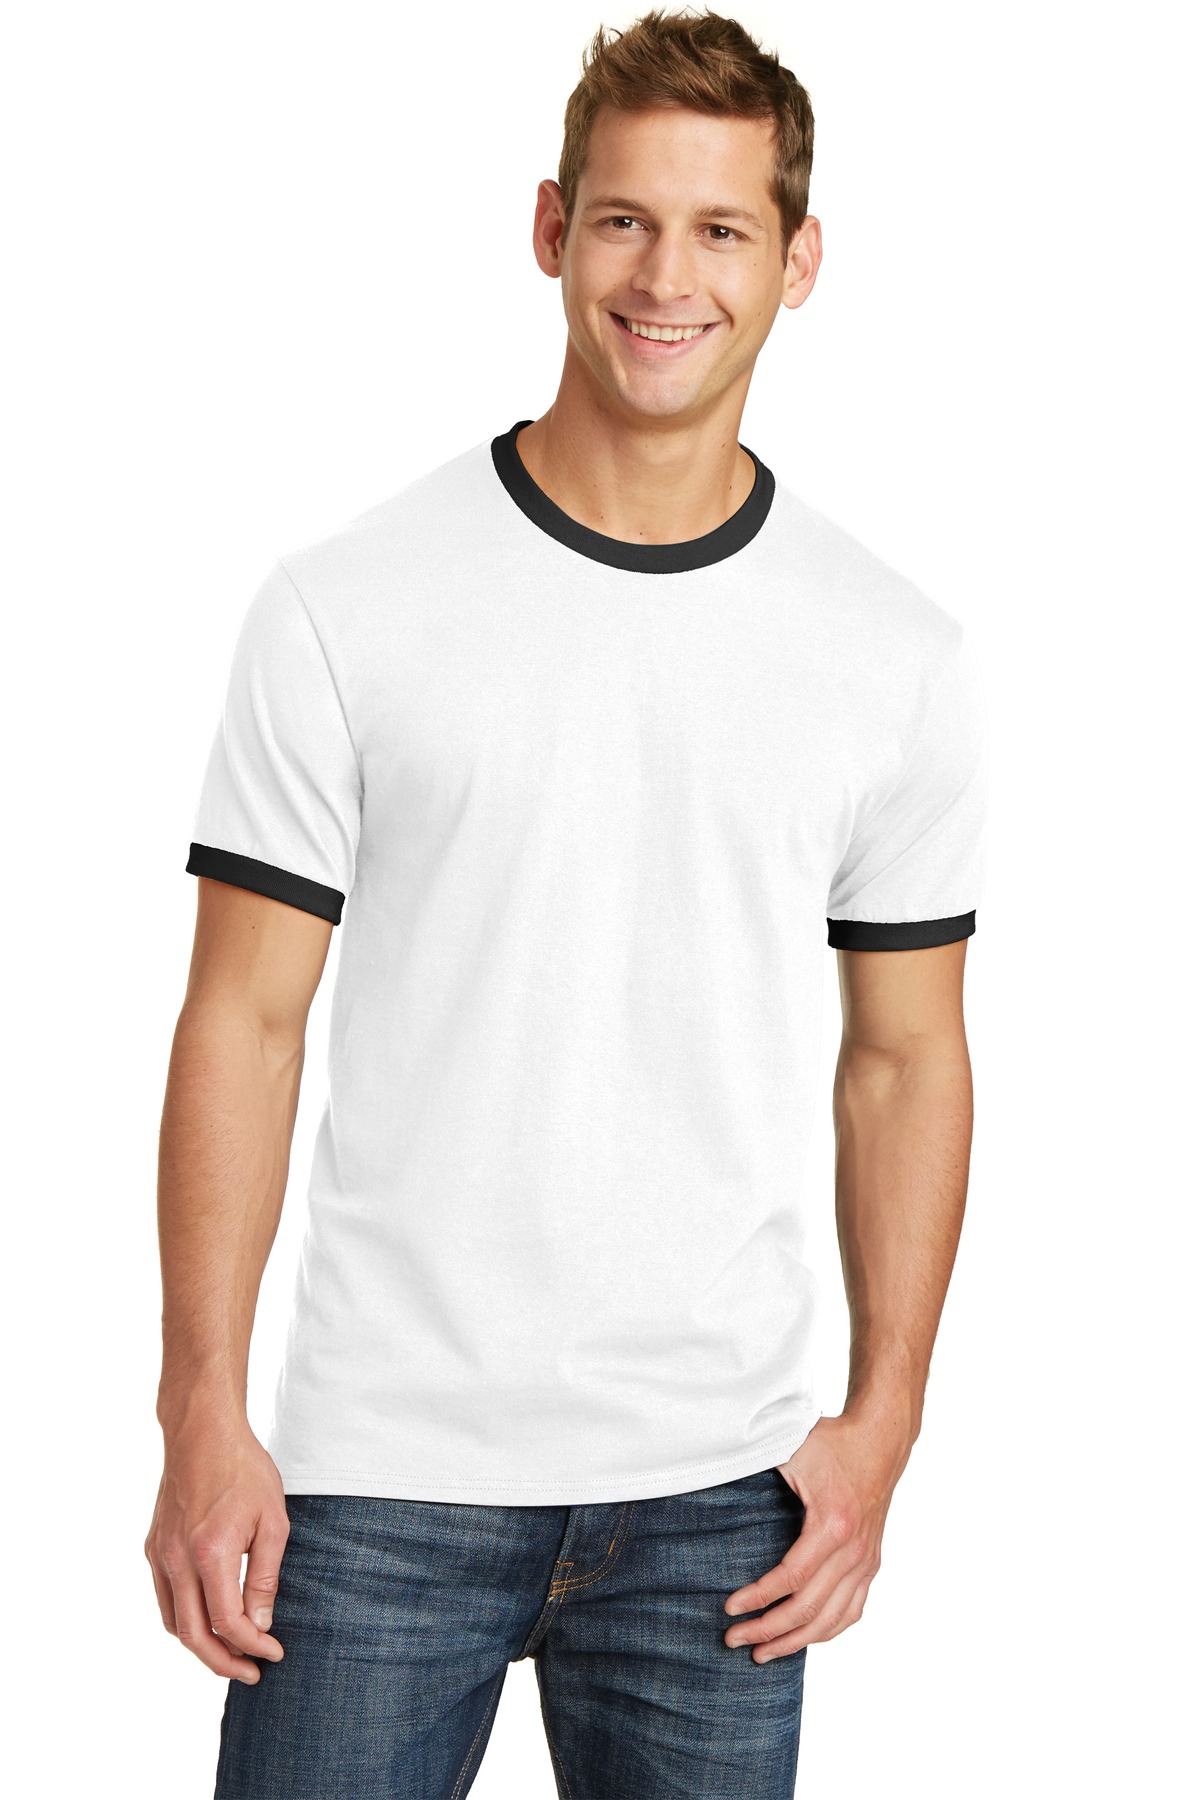 Navy Port & Company 5.4 oz 100% Cotton T-Shirt